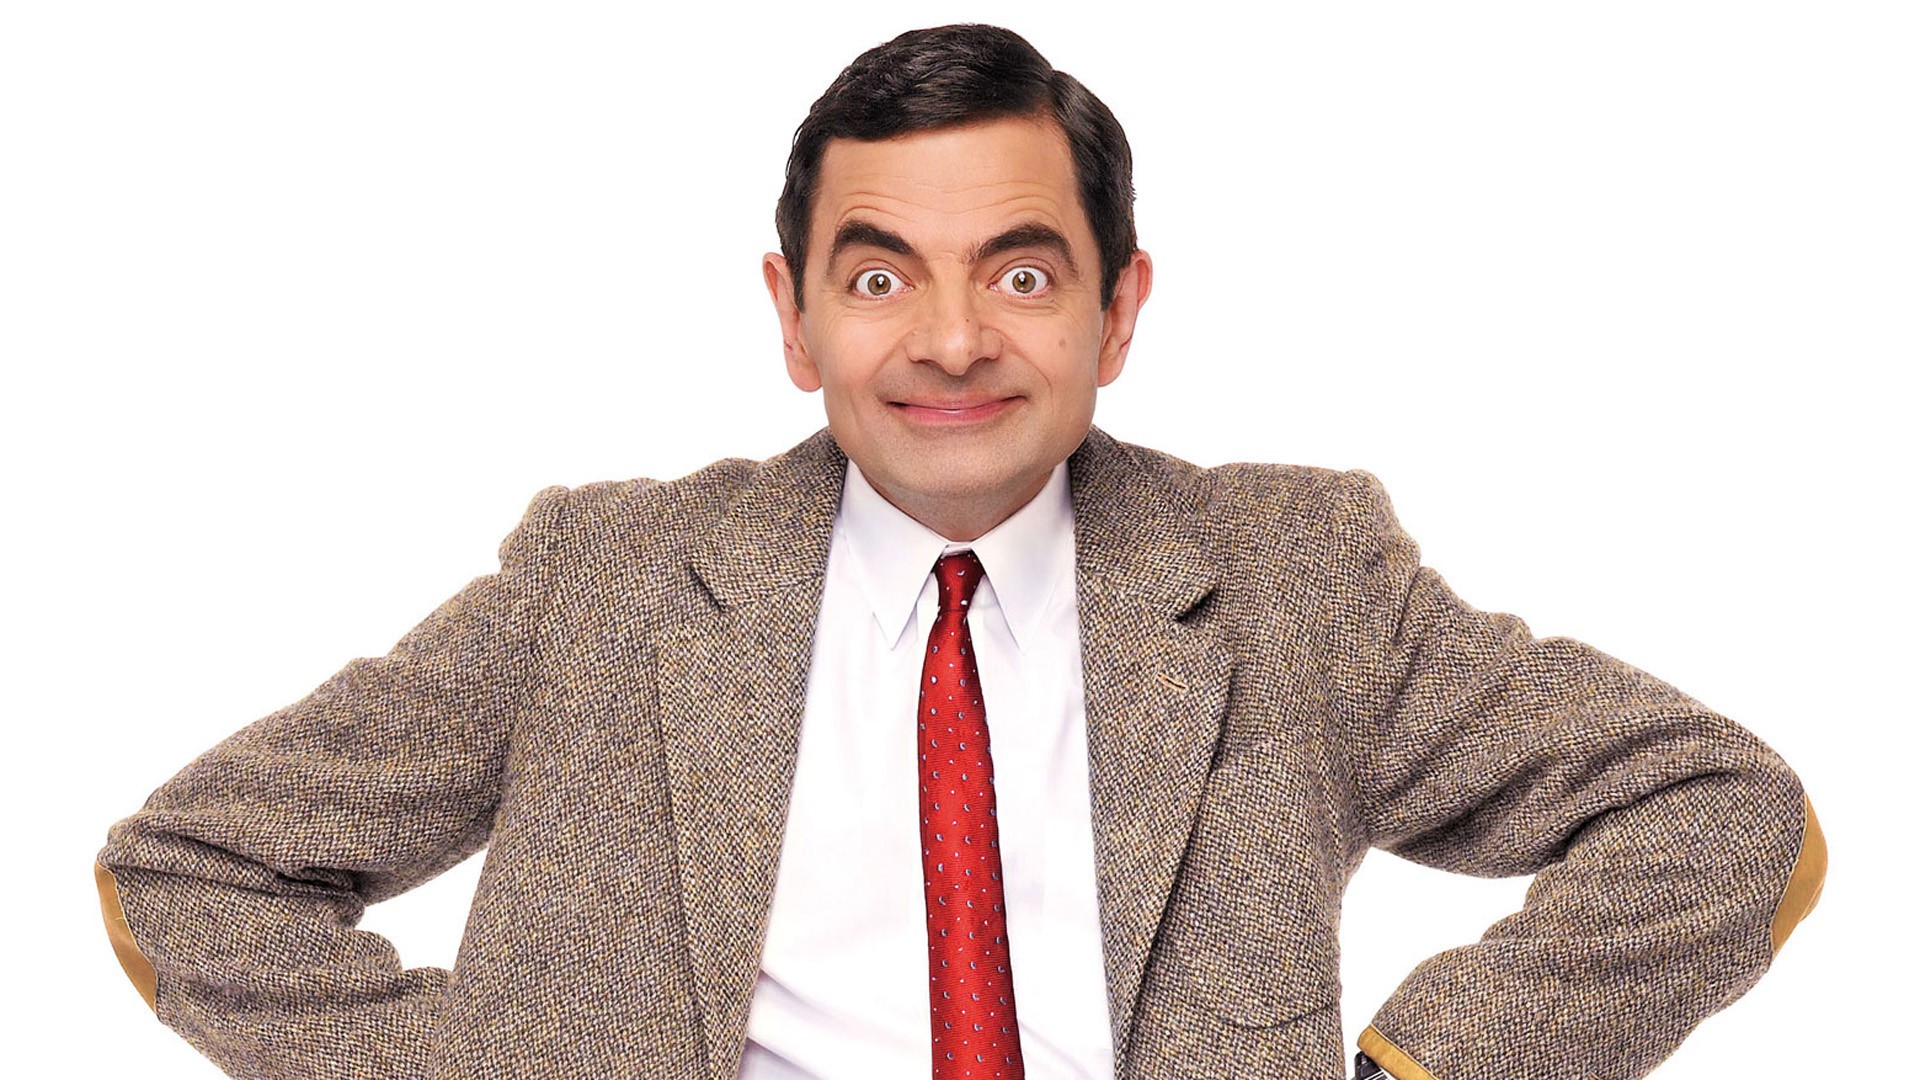 Movies Mr Bean Rowan Atkinson Men Actor Smiling Suits Tie White Background 1920x1080